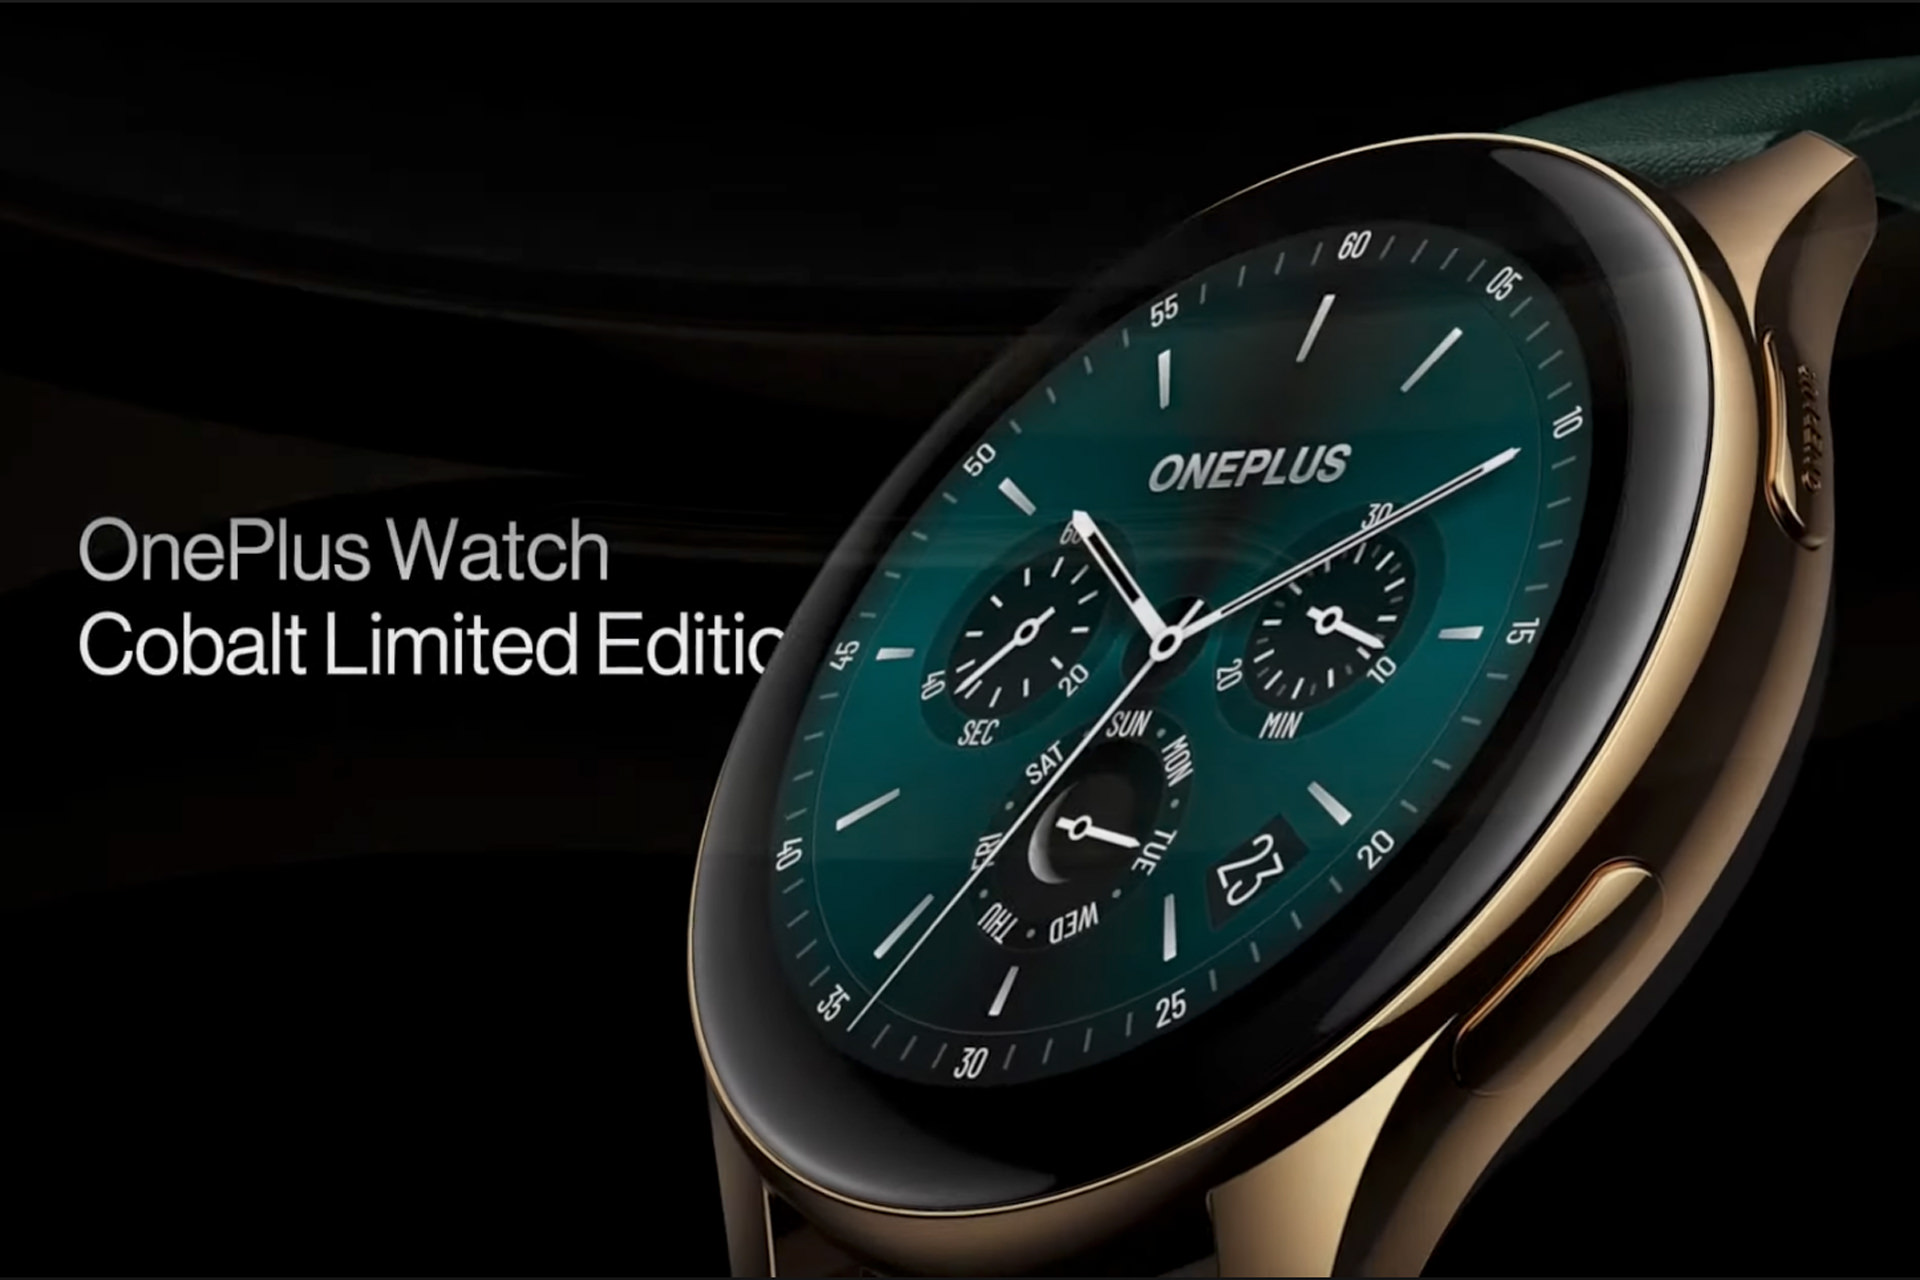 oneplus-watch-cobalt-limited-edition-render-screenshot